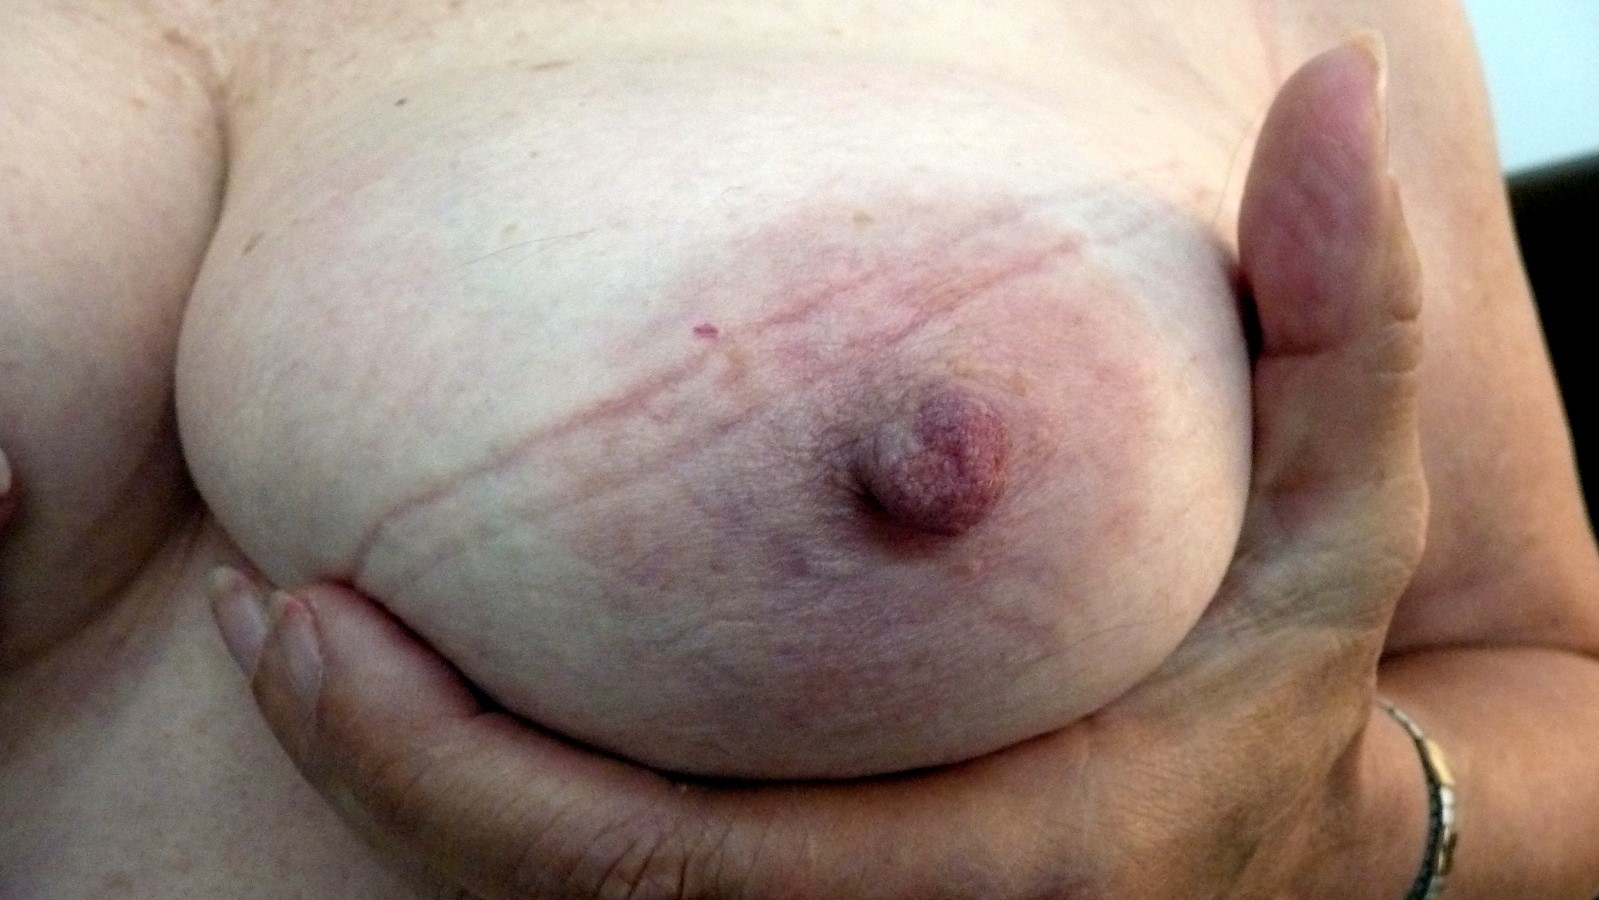 One boob photos since 2012.